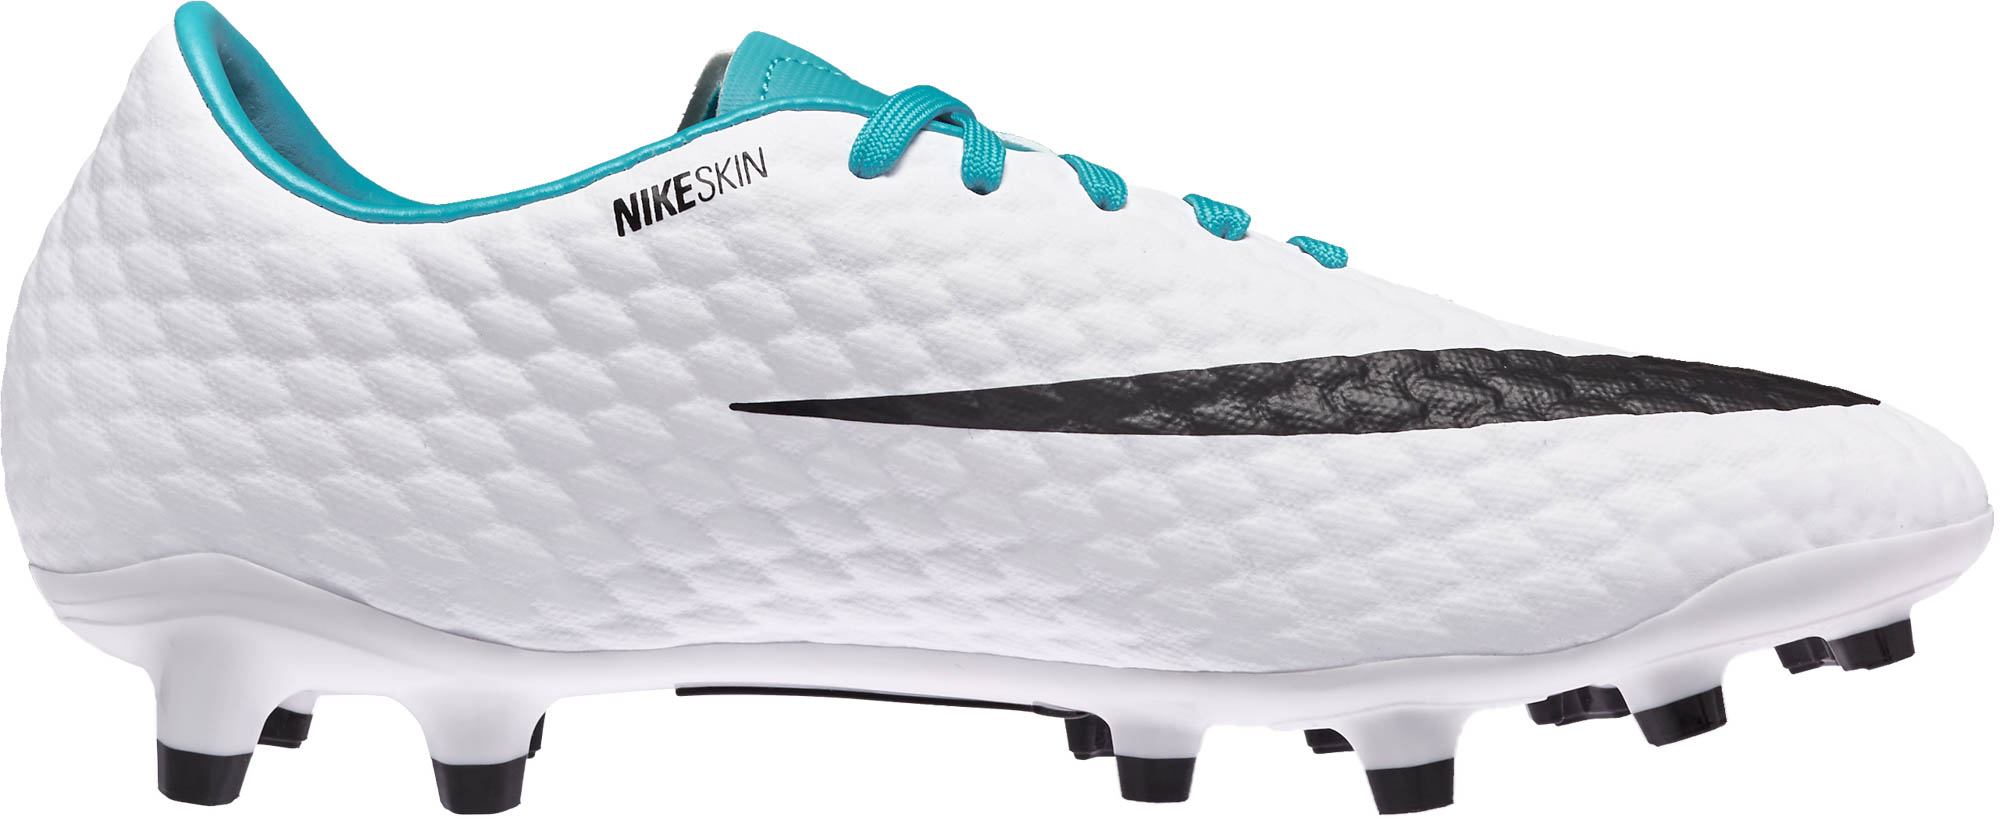 Nike Hypervenom Phelon III Soccer Cleats - & Photo Blue - Soccer Master